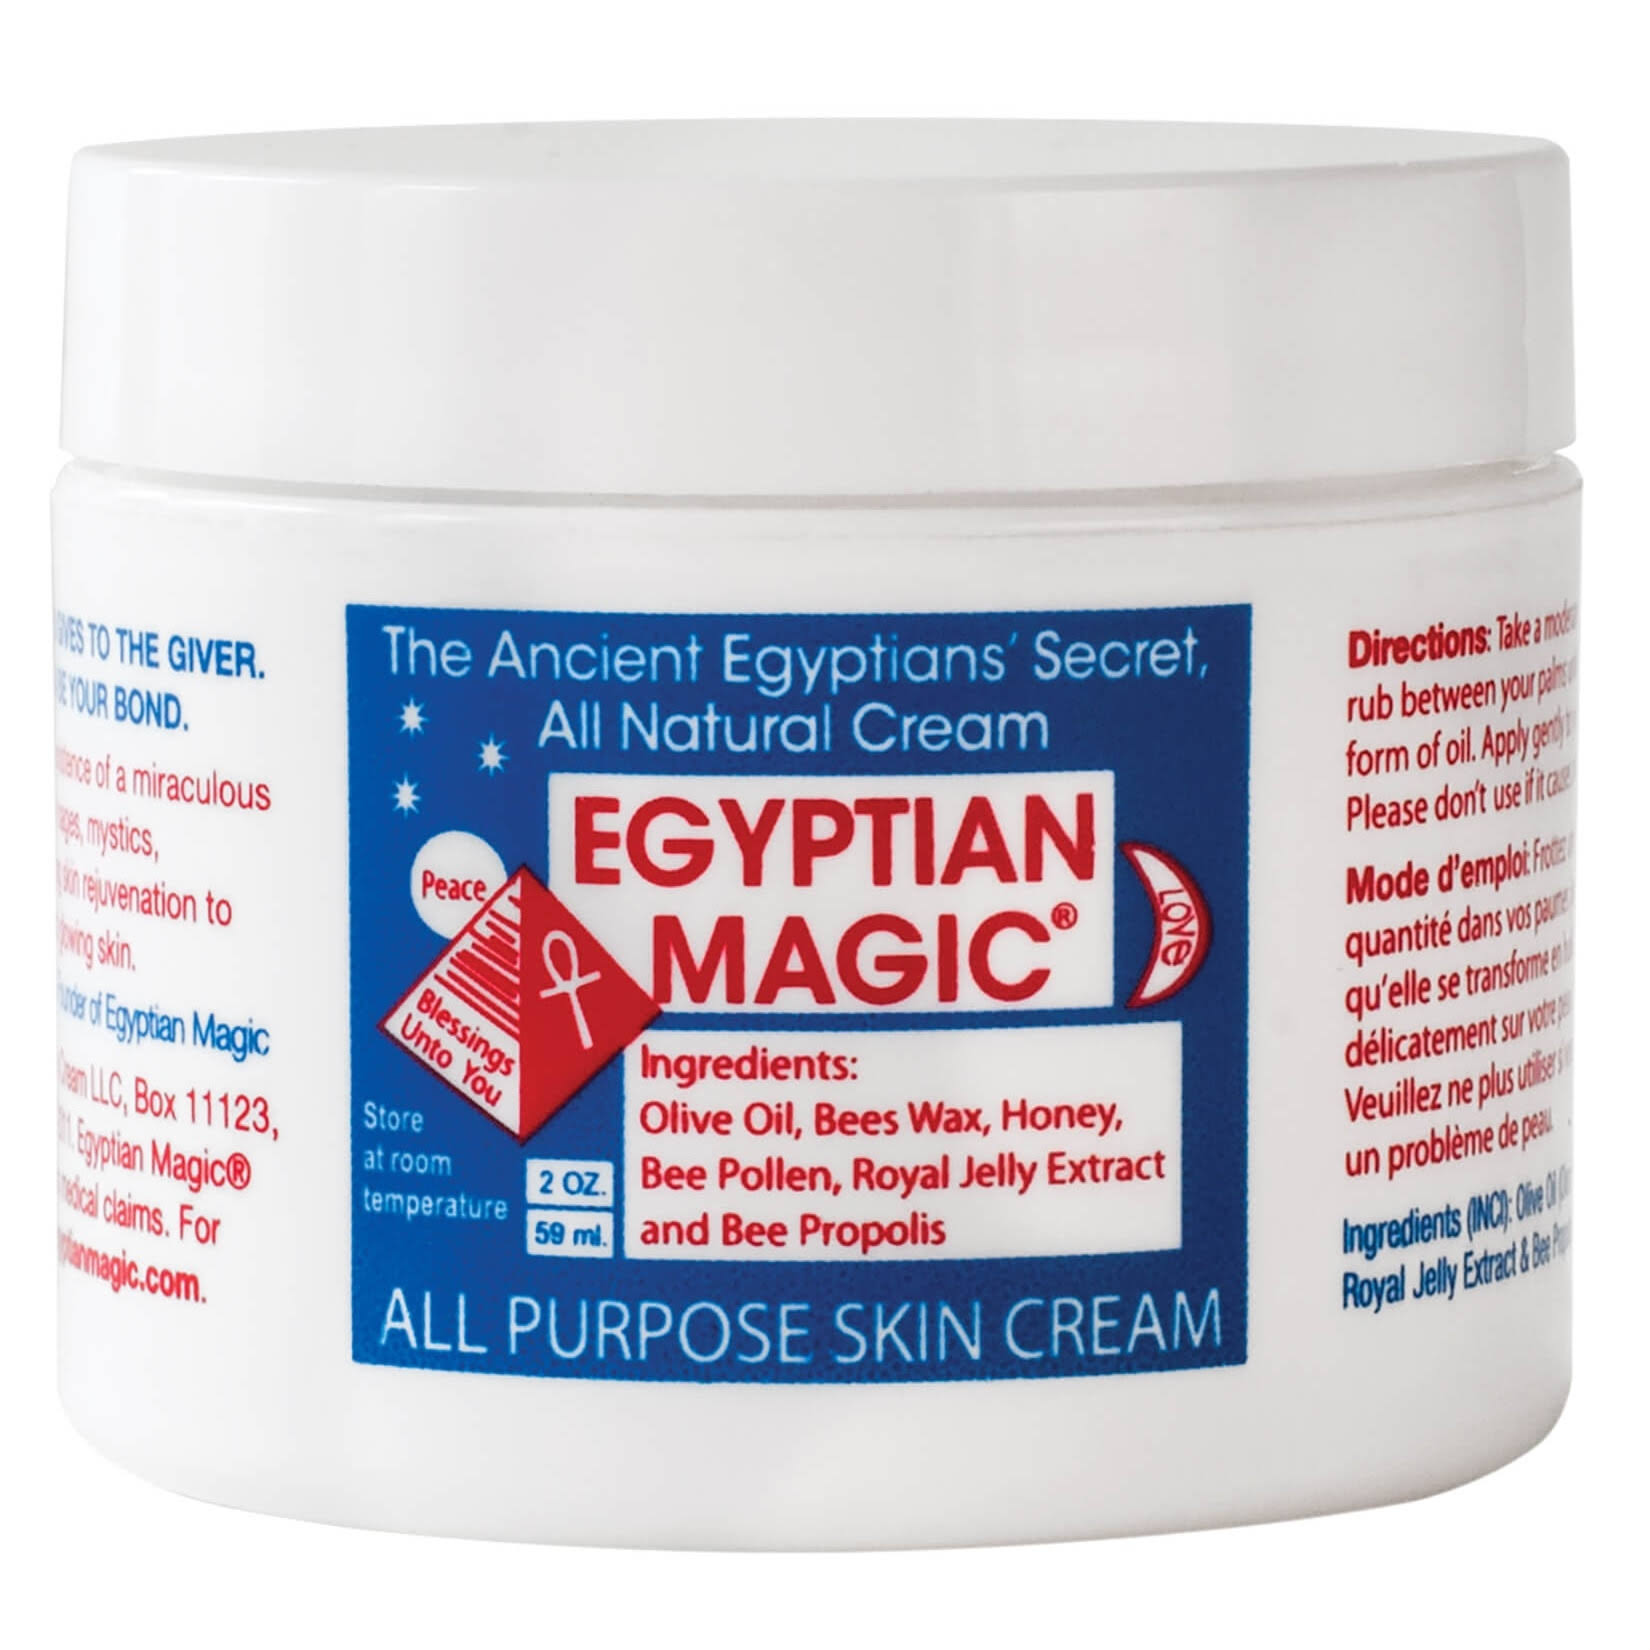 Egyptian Magic All Purpose Skin Cream Skin Care - 59ml